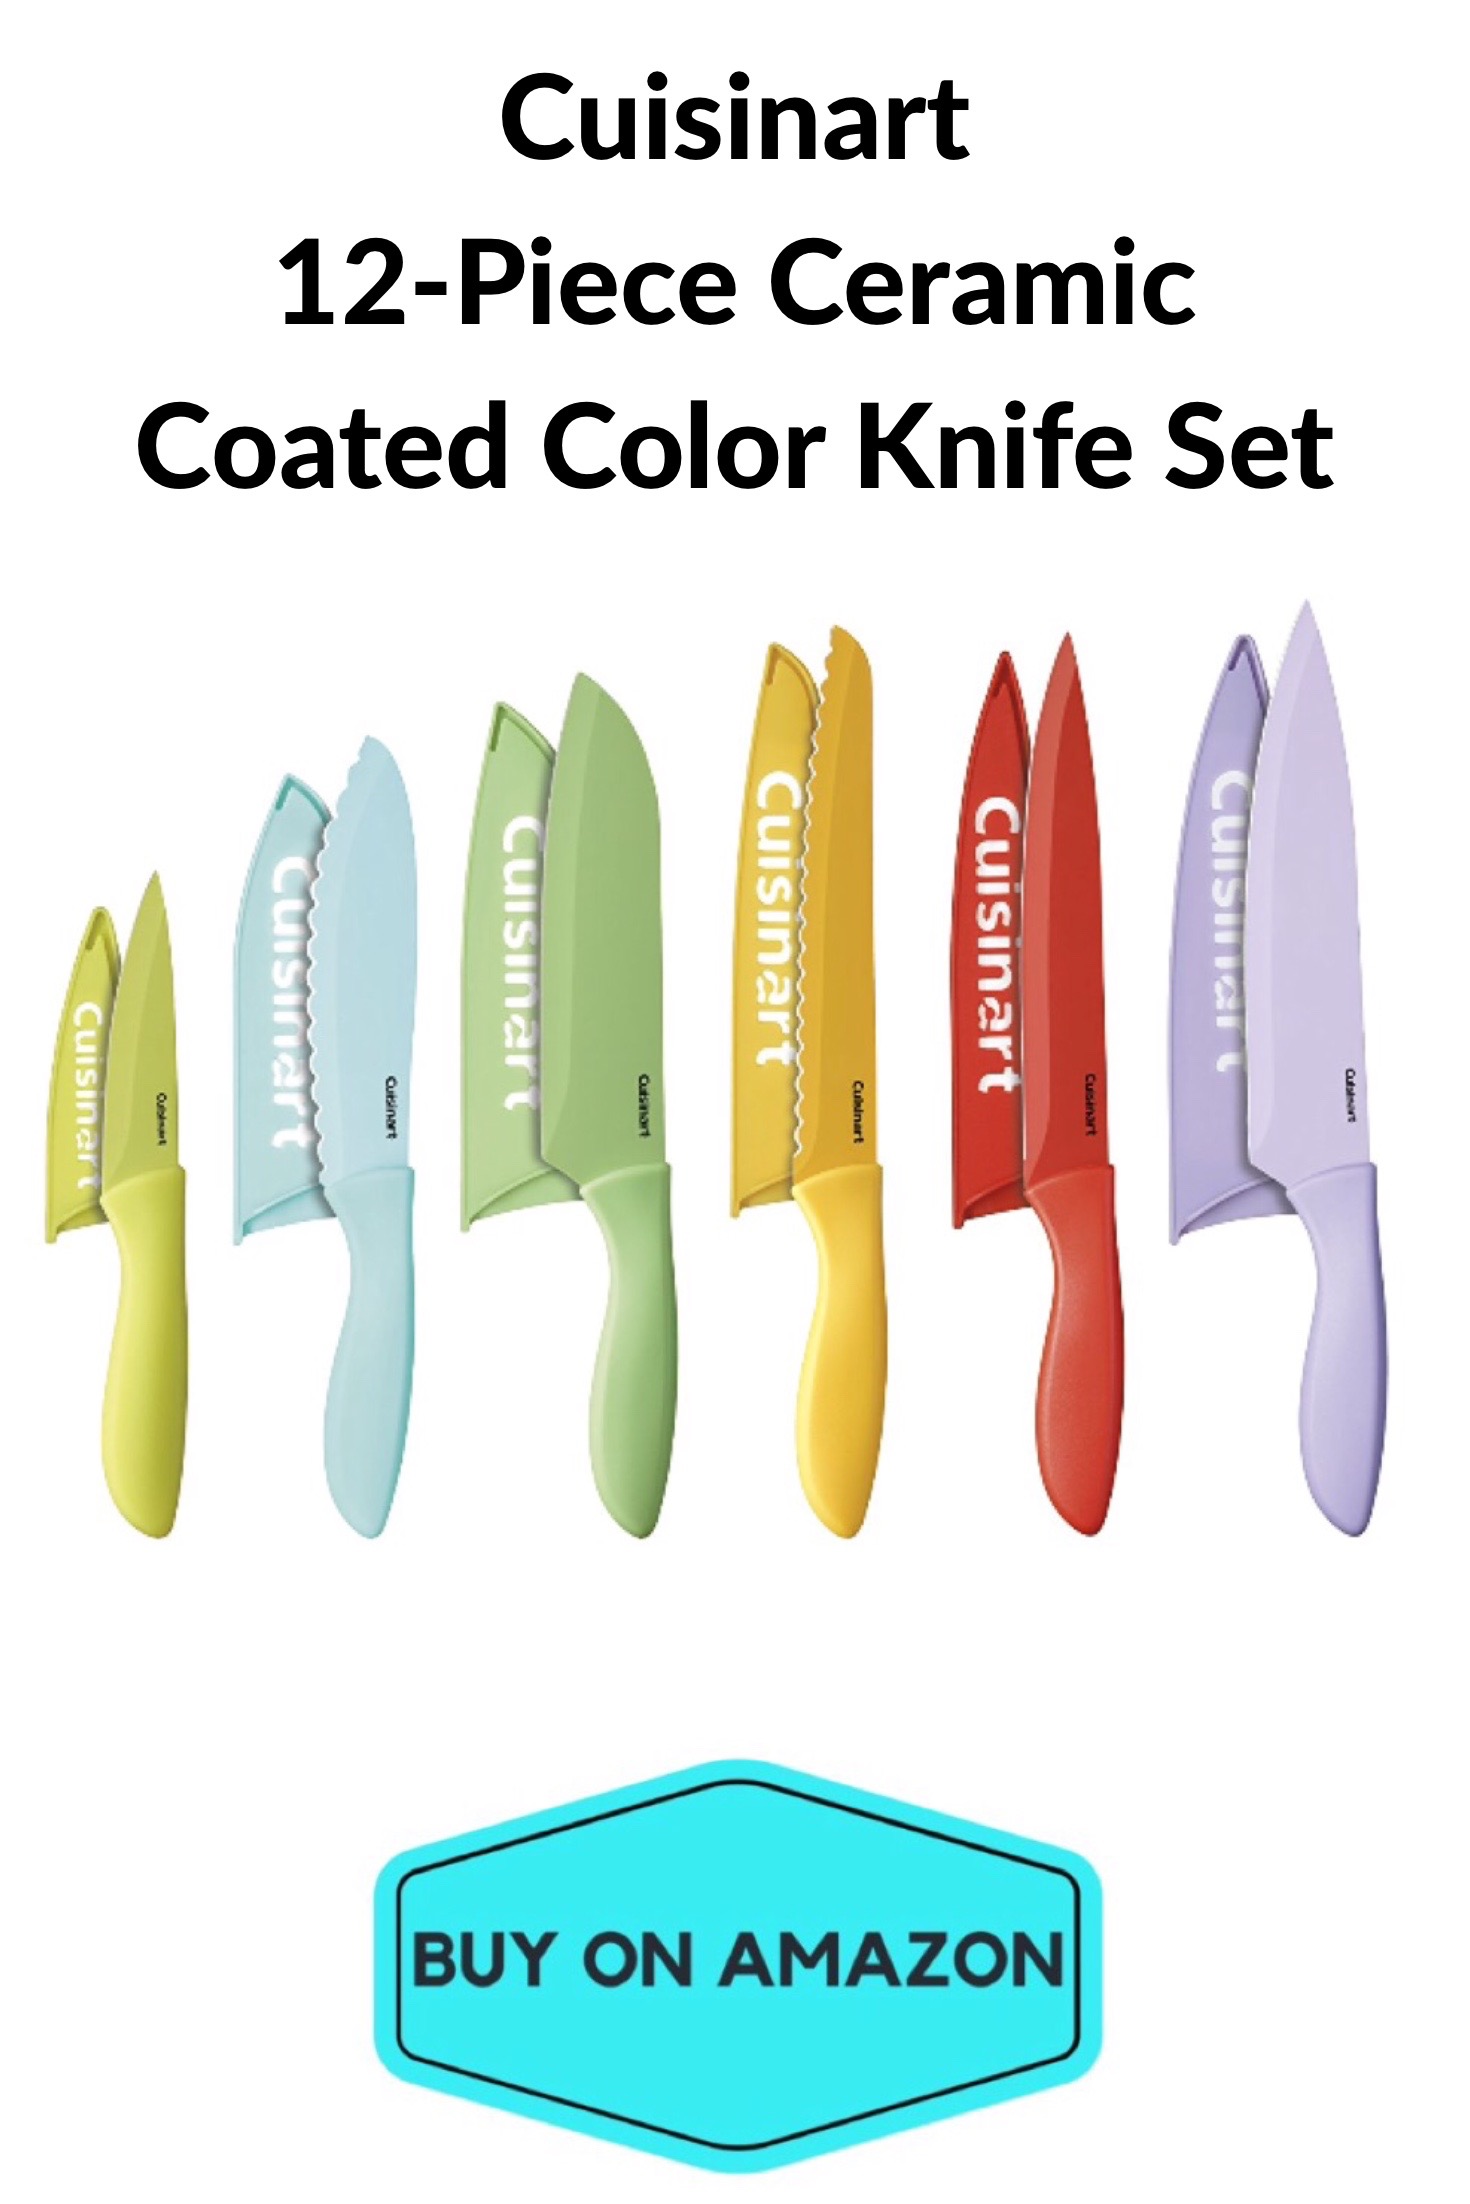 Cuisinart 12 pc Ceramic Coated Color Knife Set